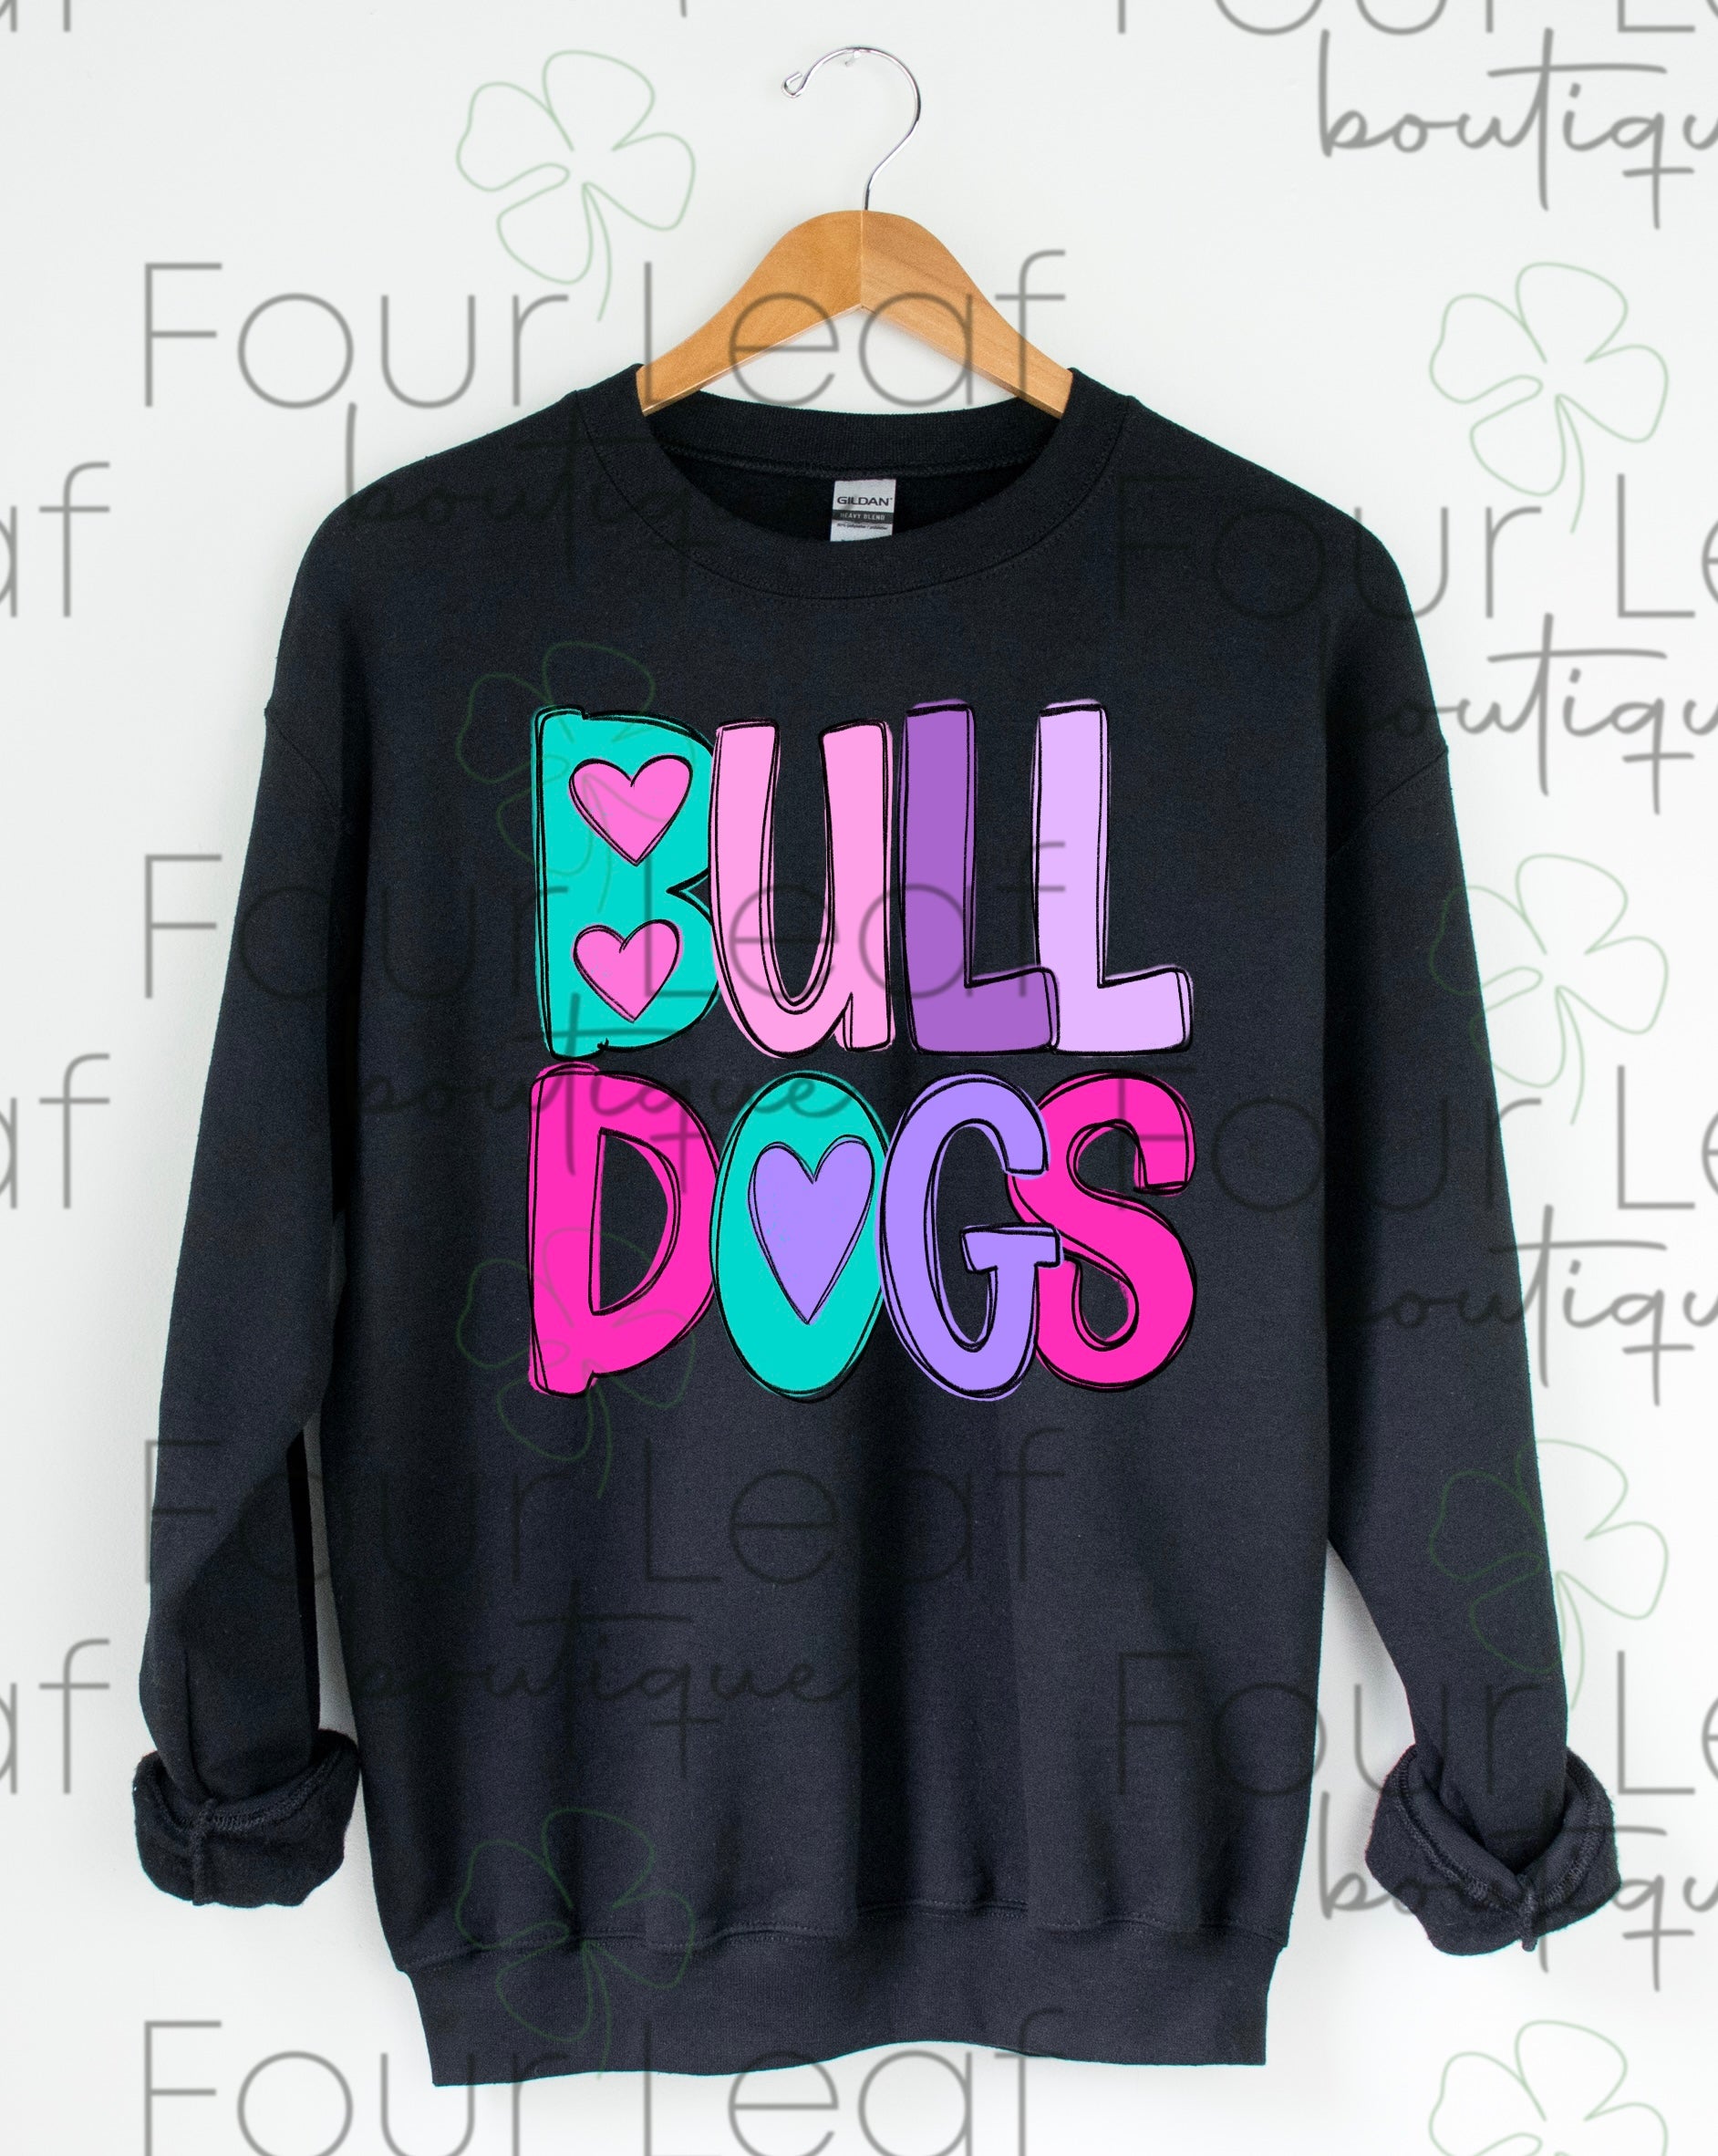 Bulldogs sweatshirt